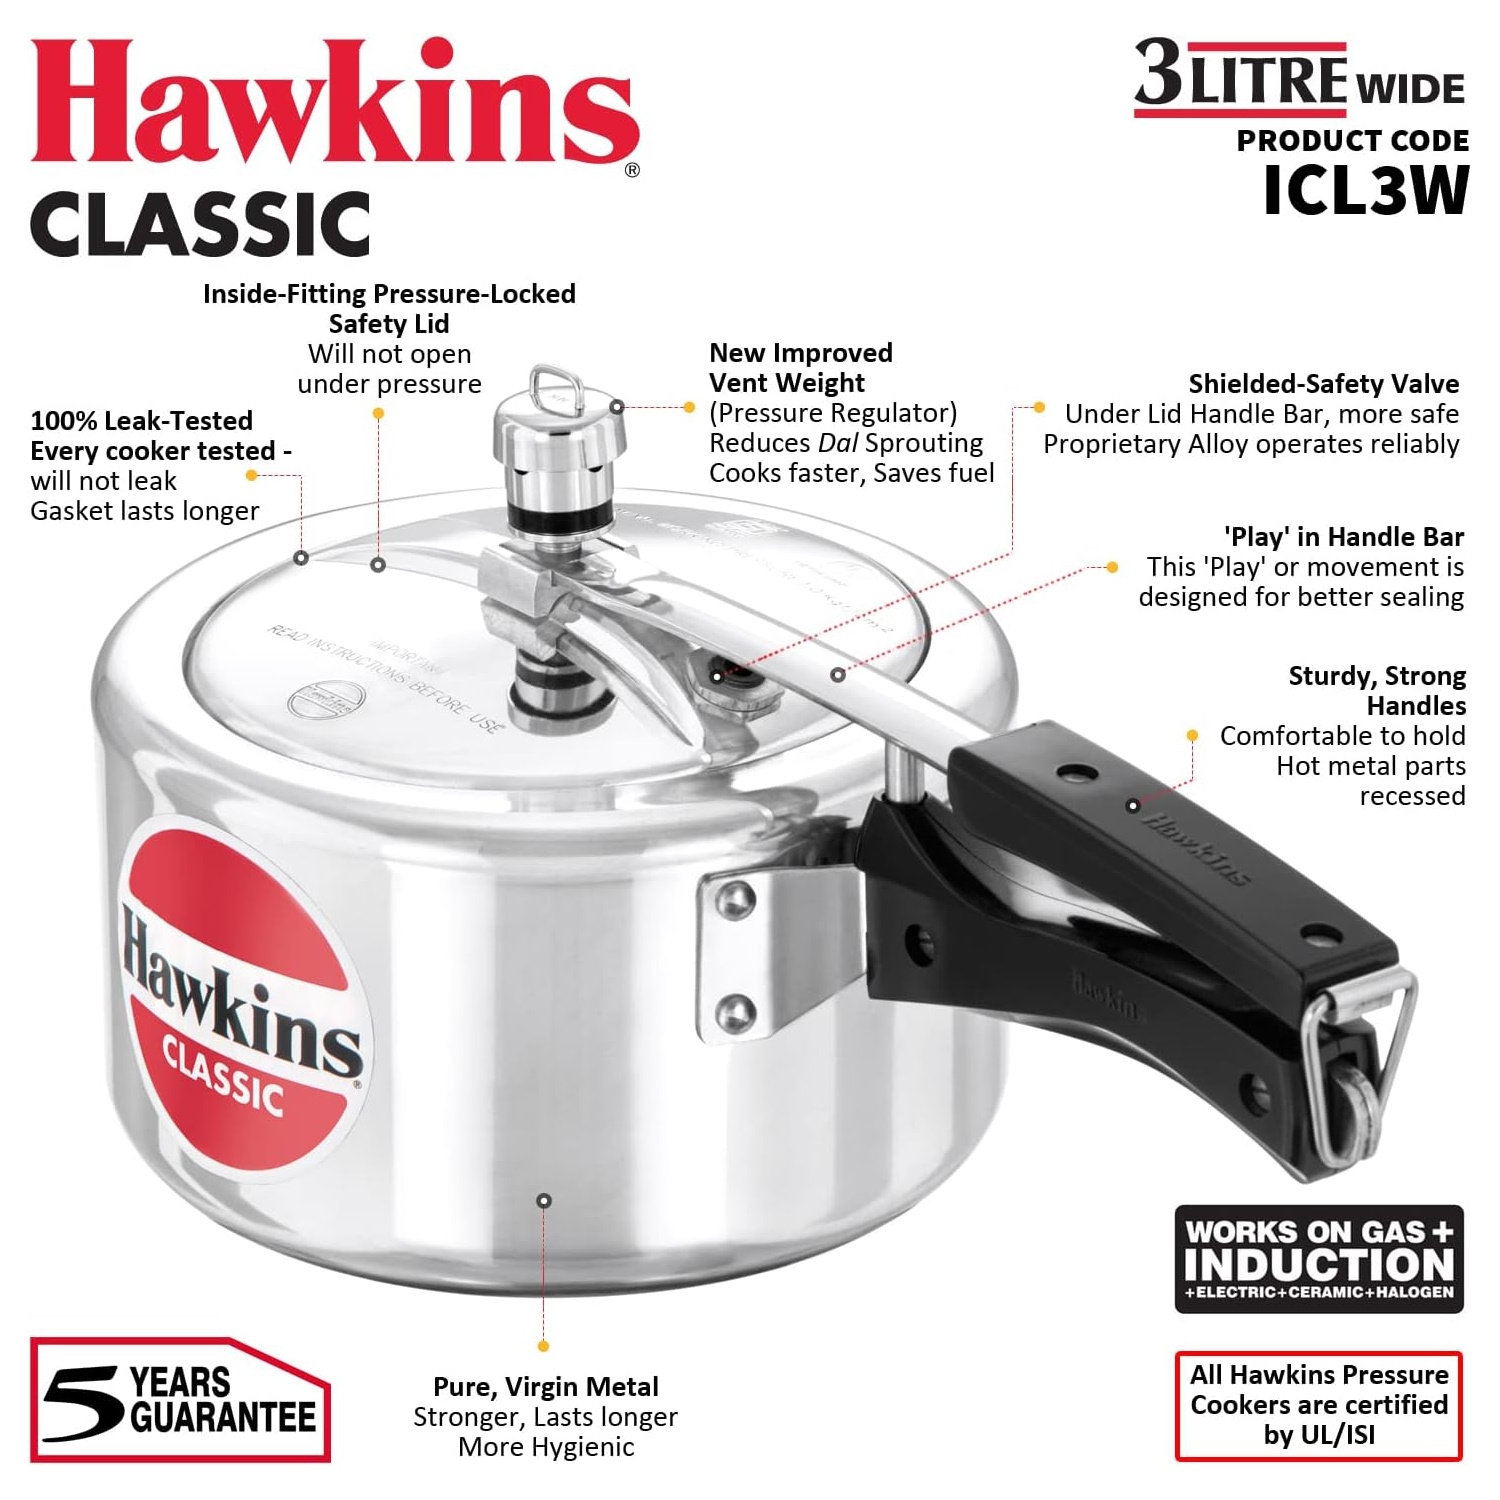 Hawkins Classic 3L Wide Pressure Cooker - ICL50